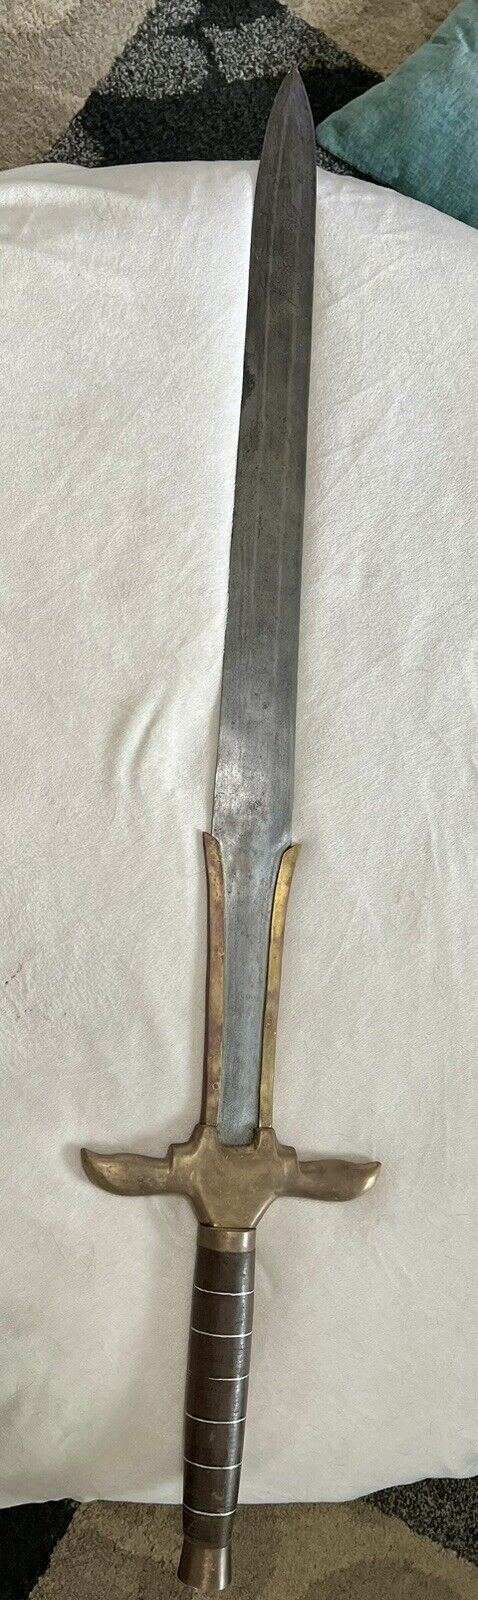 Scottish Claymore Sword Handmade Stainless Steel Medieval Sword